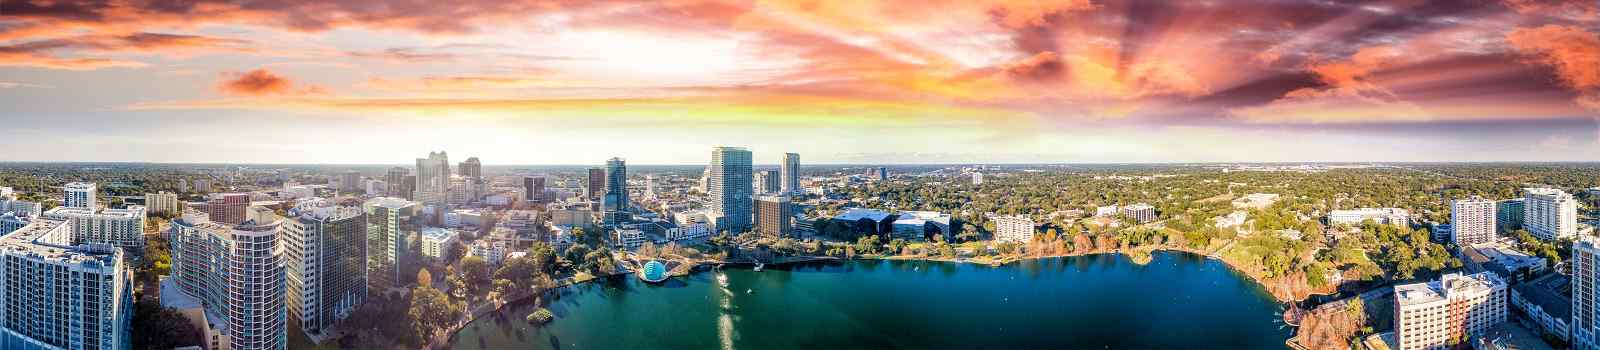 KIDS-FL-SLIDER Panoramic aerial view of Lake Eola and surrounding buildings  Orlando 736272670